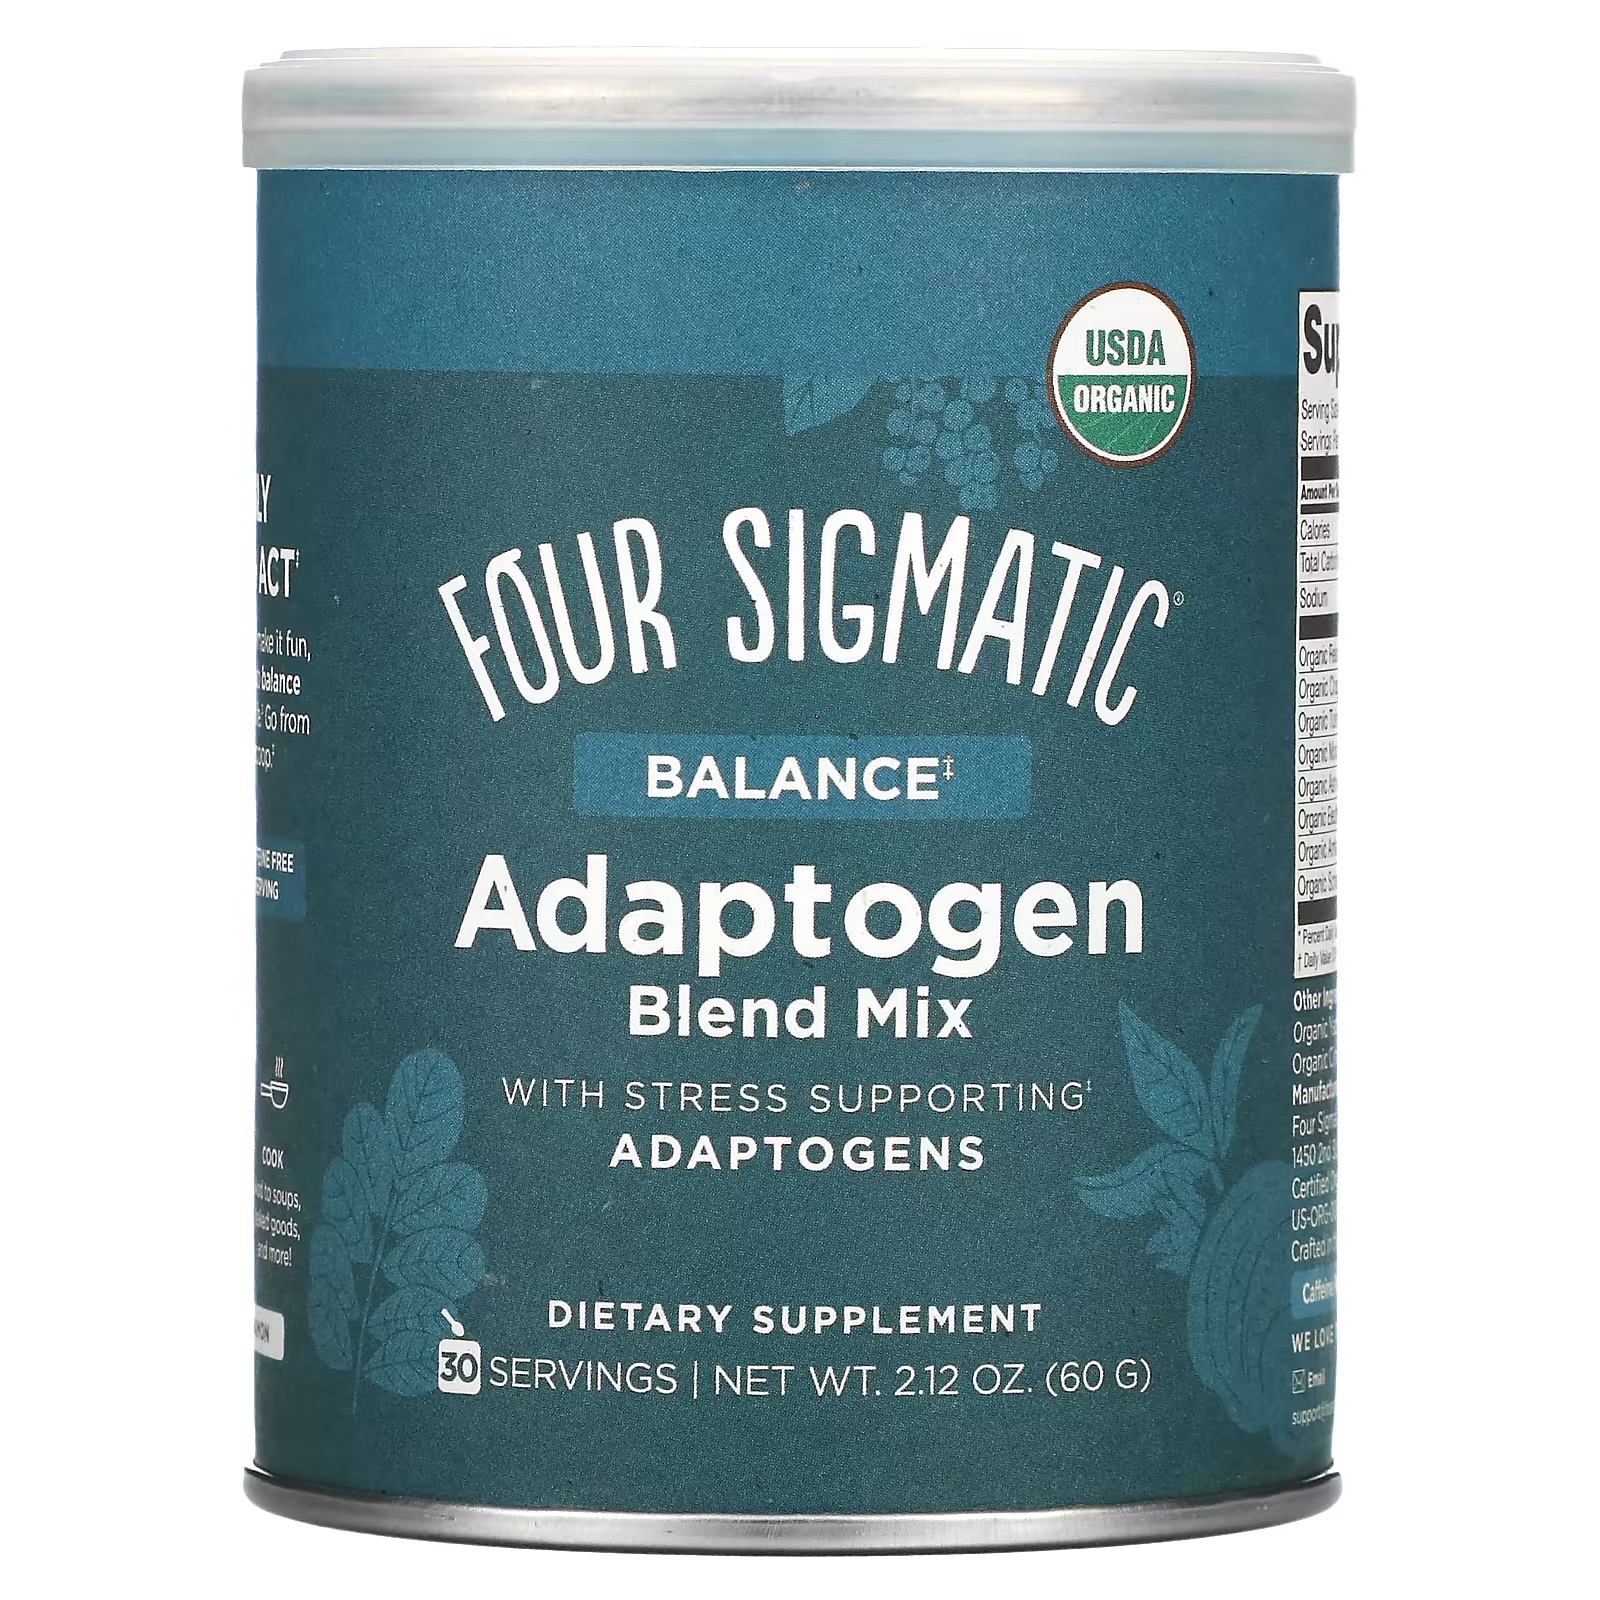 Four Sigmatic Смесь Adaptogen Blend Mix баланс, 60 г цена и фото